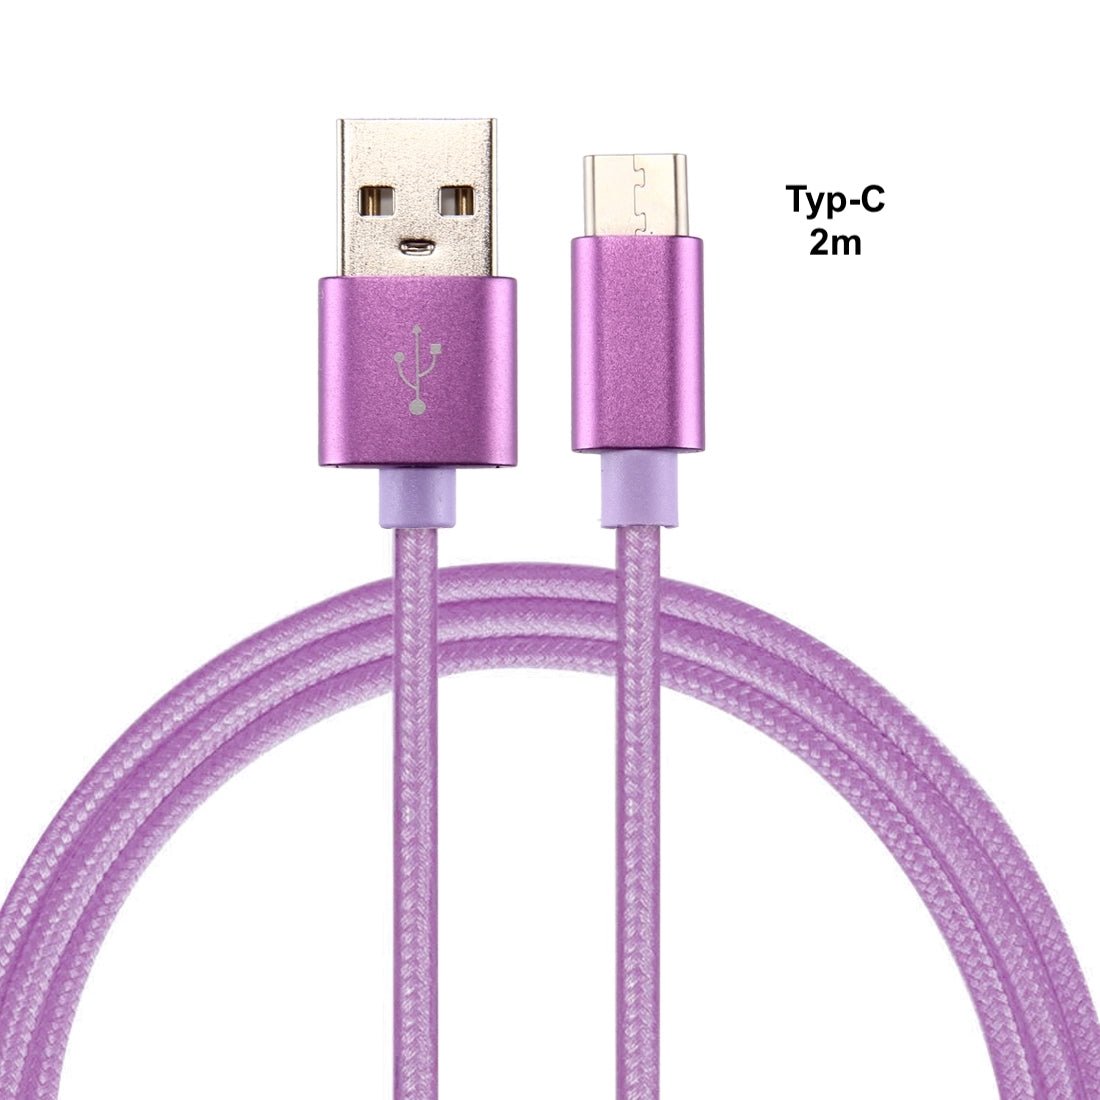 Typ C USB Schnell Ladekabel 2m Violett rund - Calitronshop.com